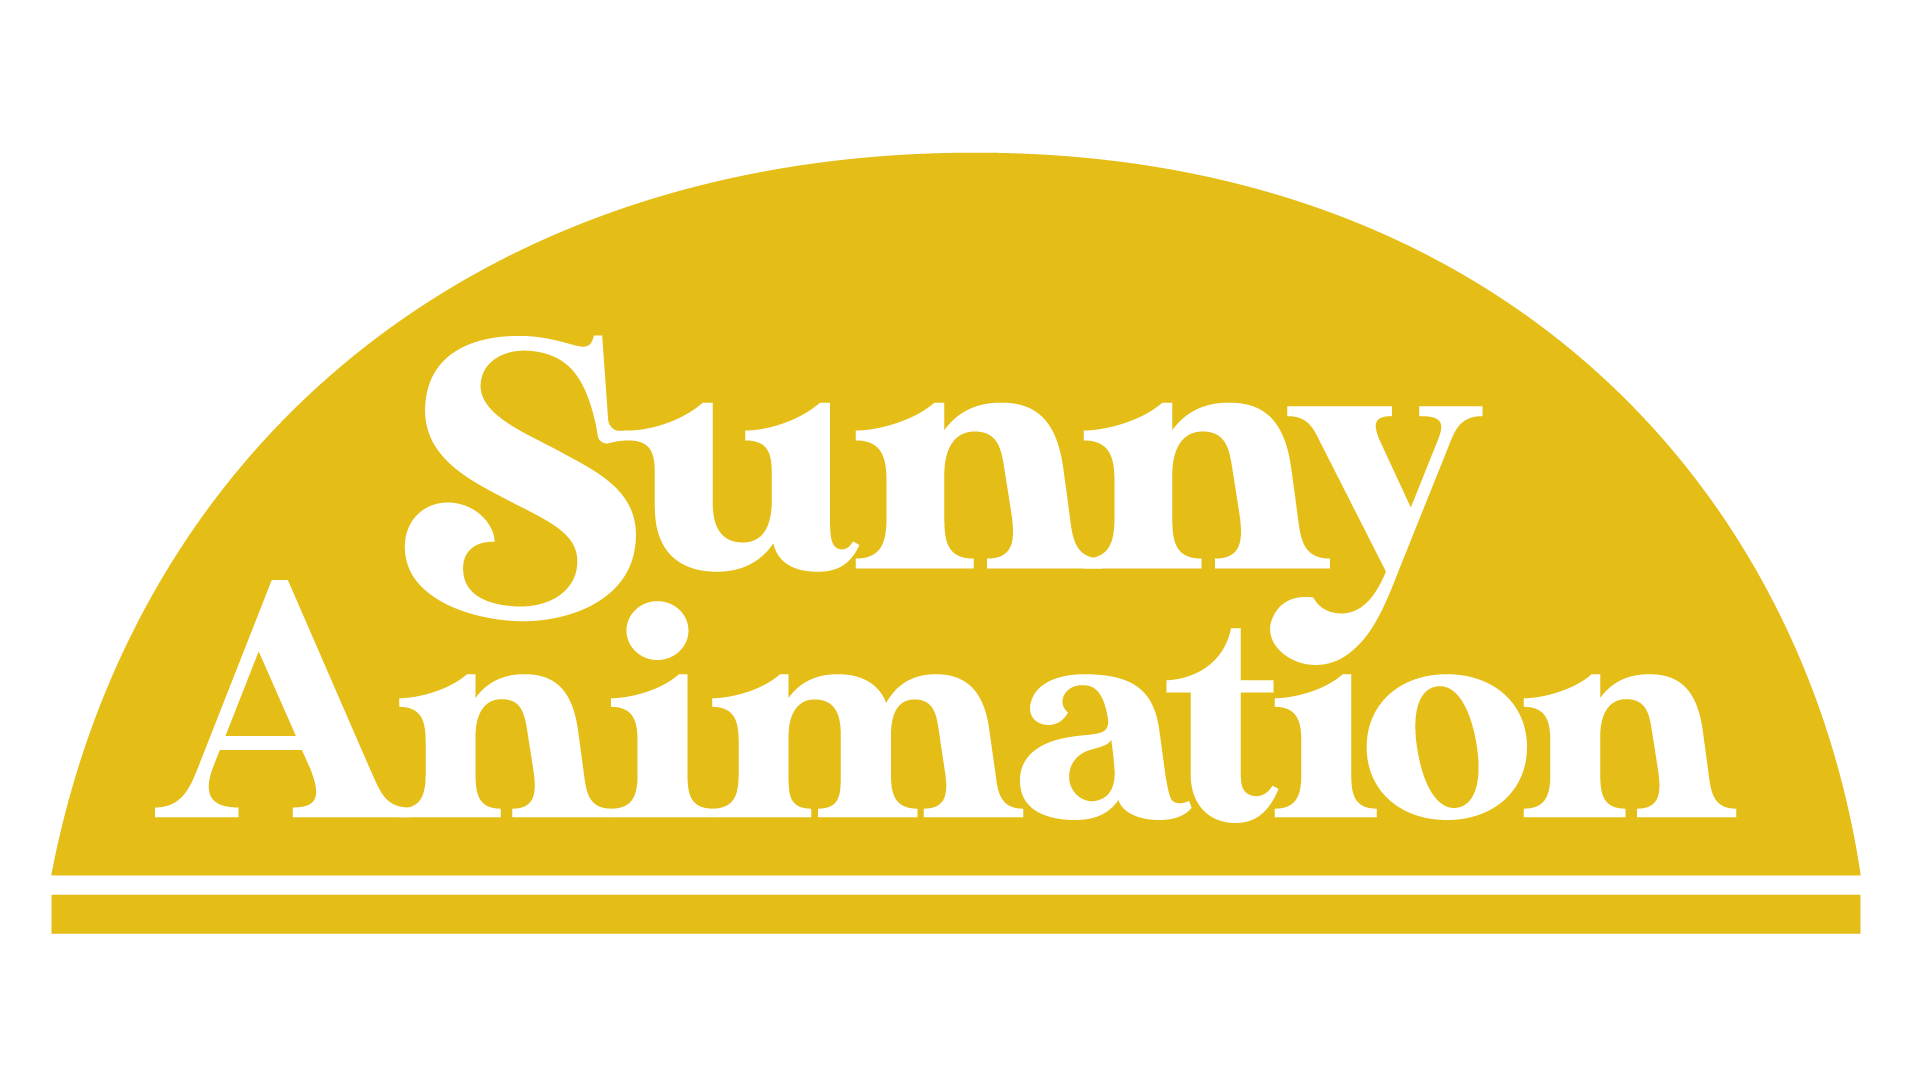 Sunny Animation